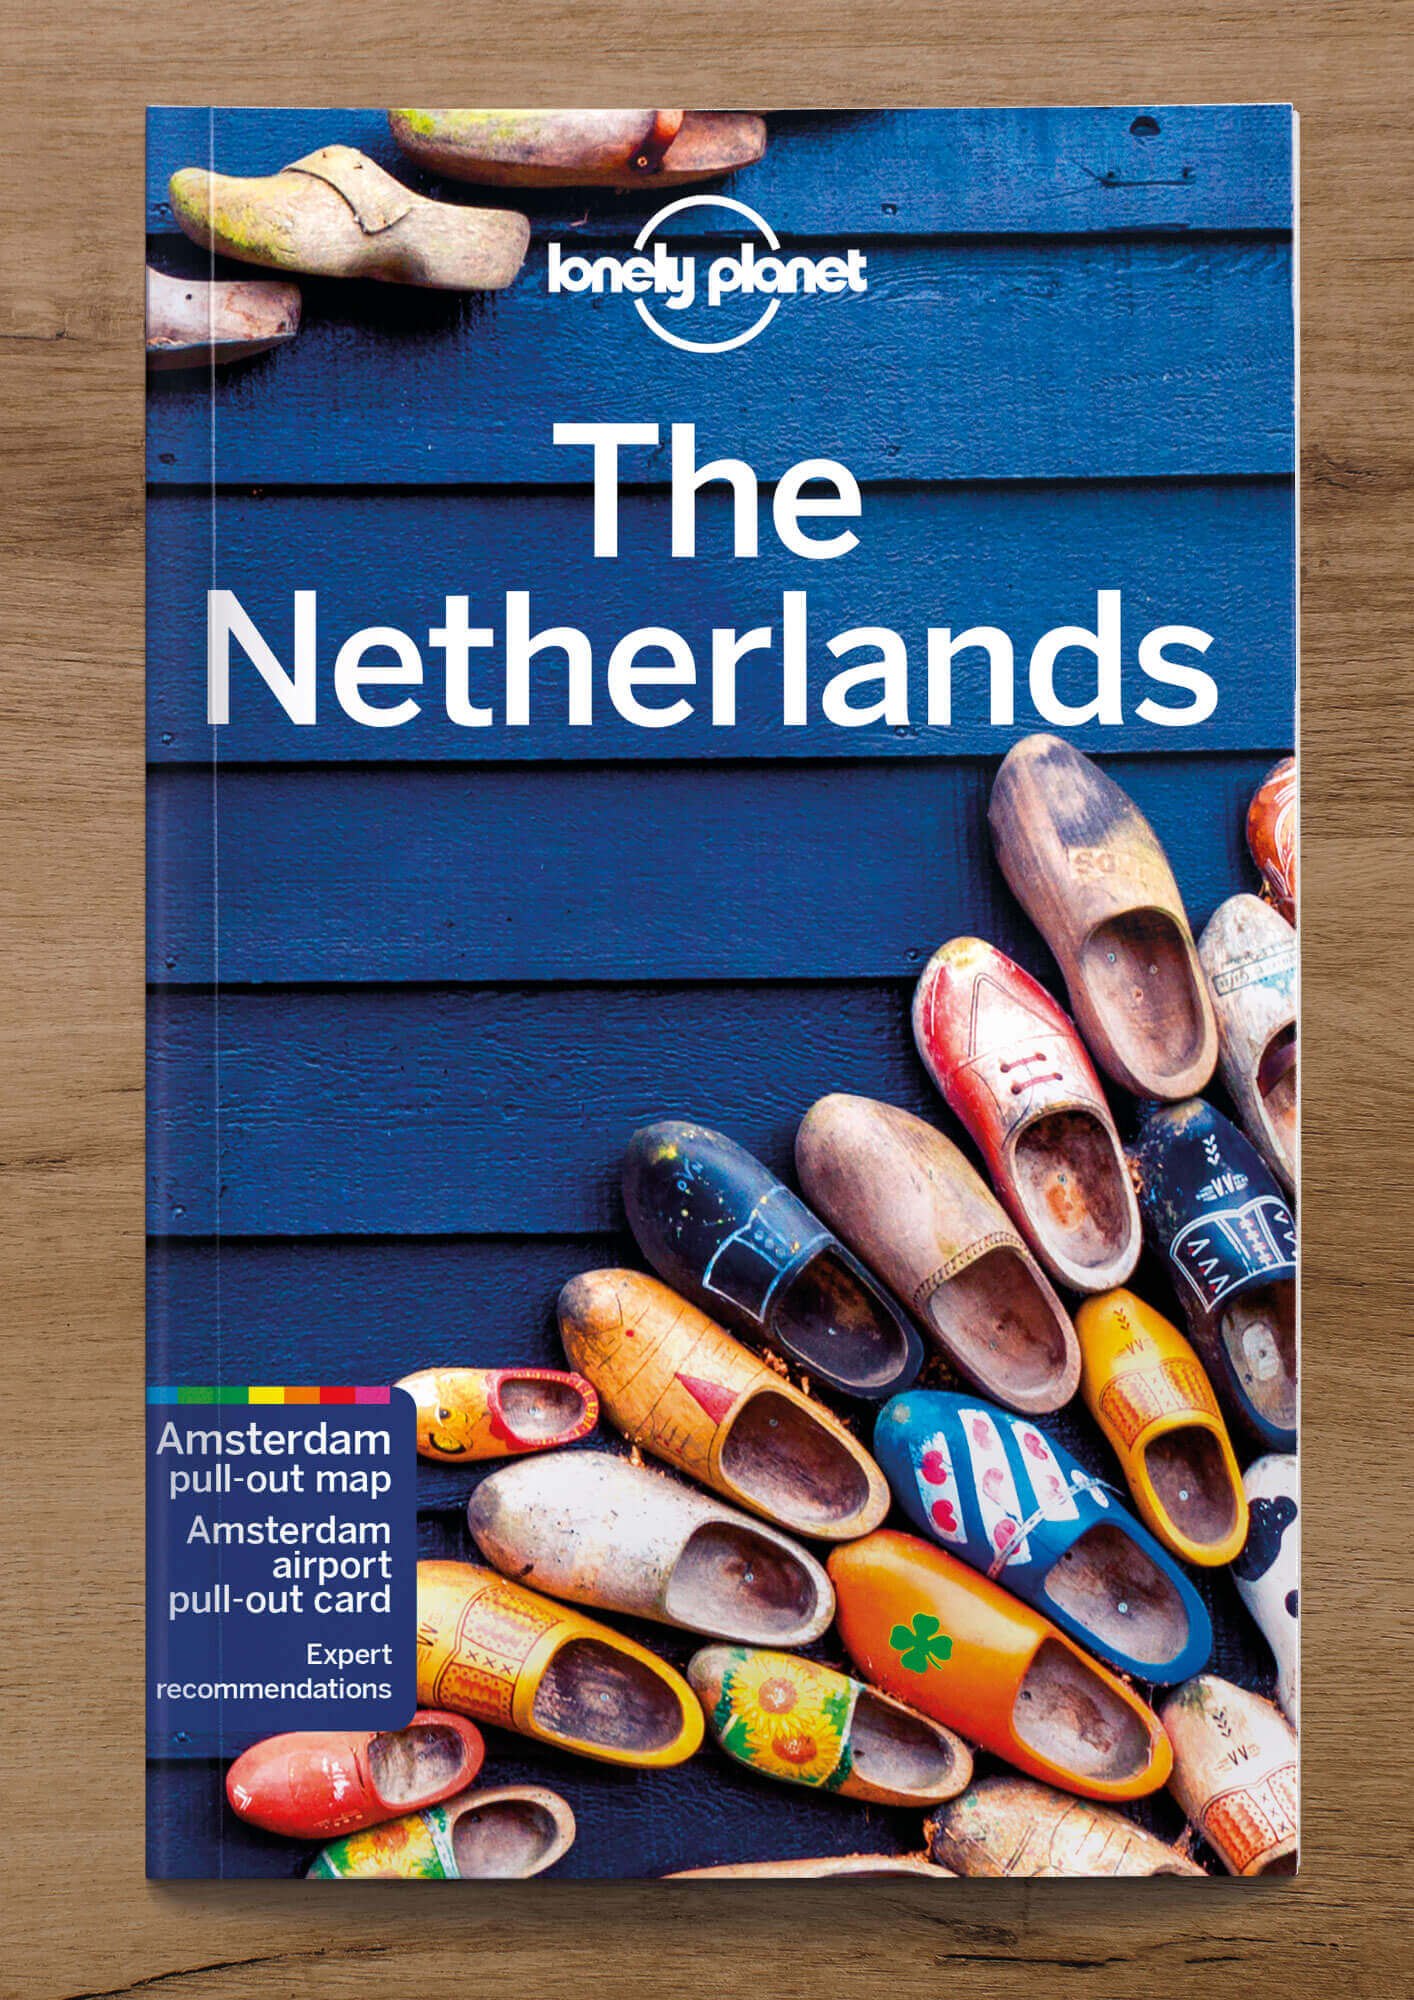  Bestselling Lonelyplanet ebook bundle - The Netherlands